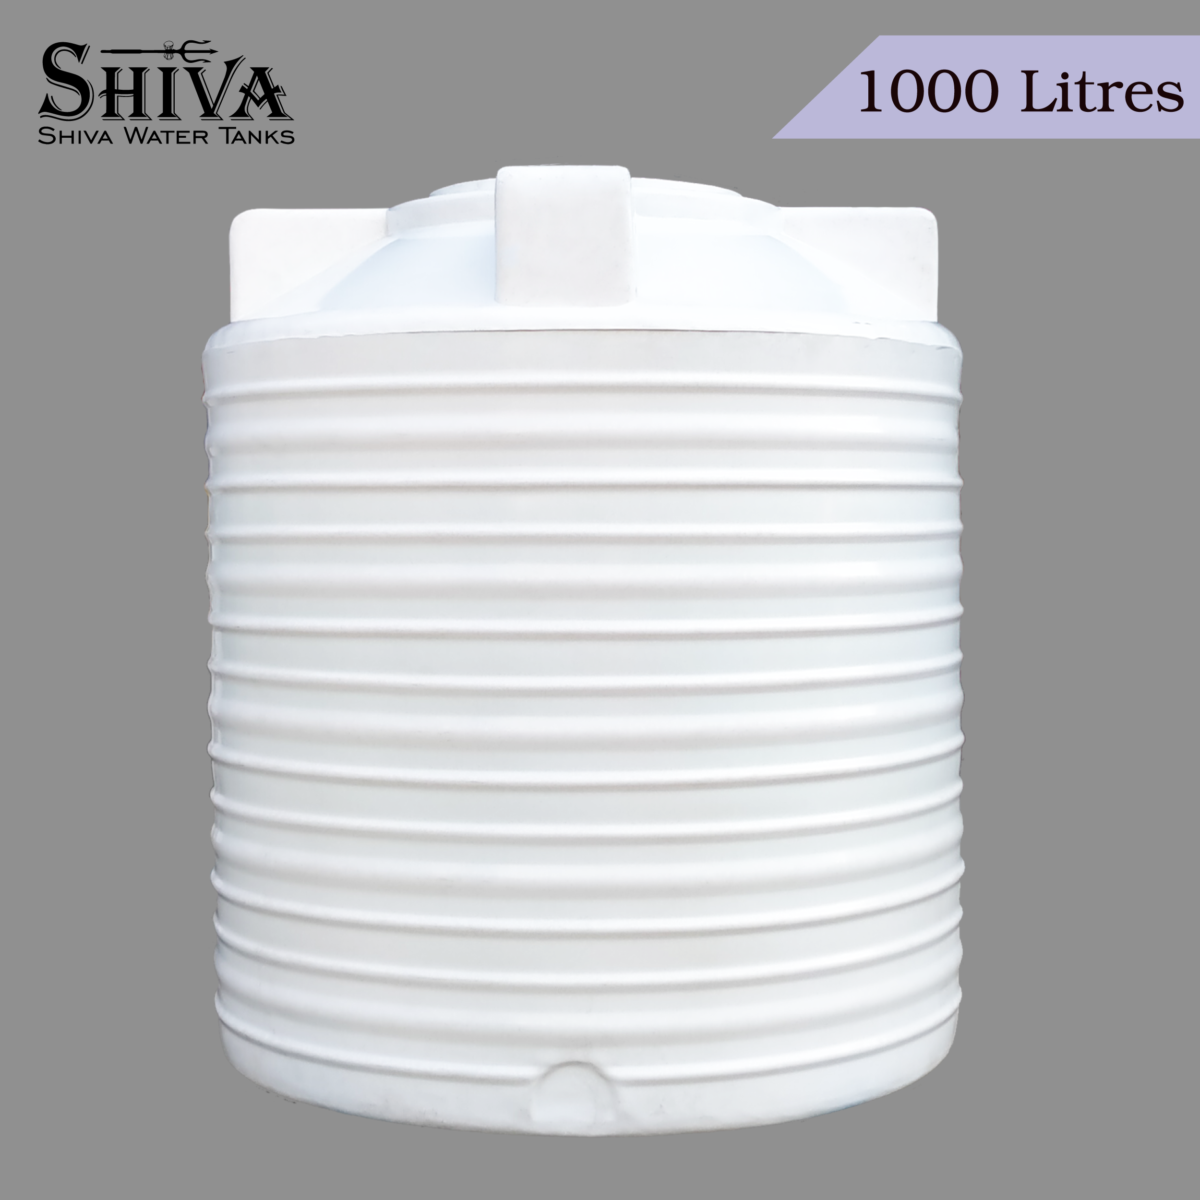 1000 Litres - SHIVA Plus - 3 Layers